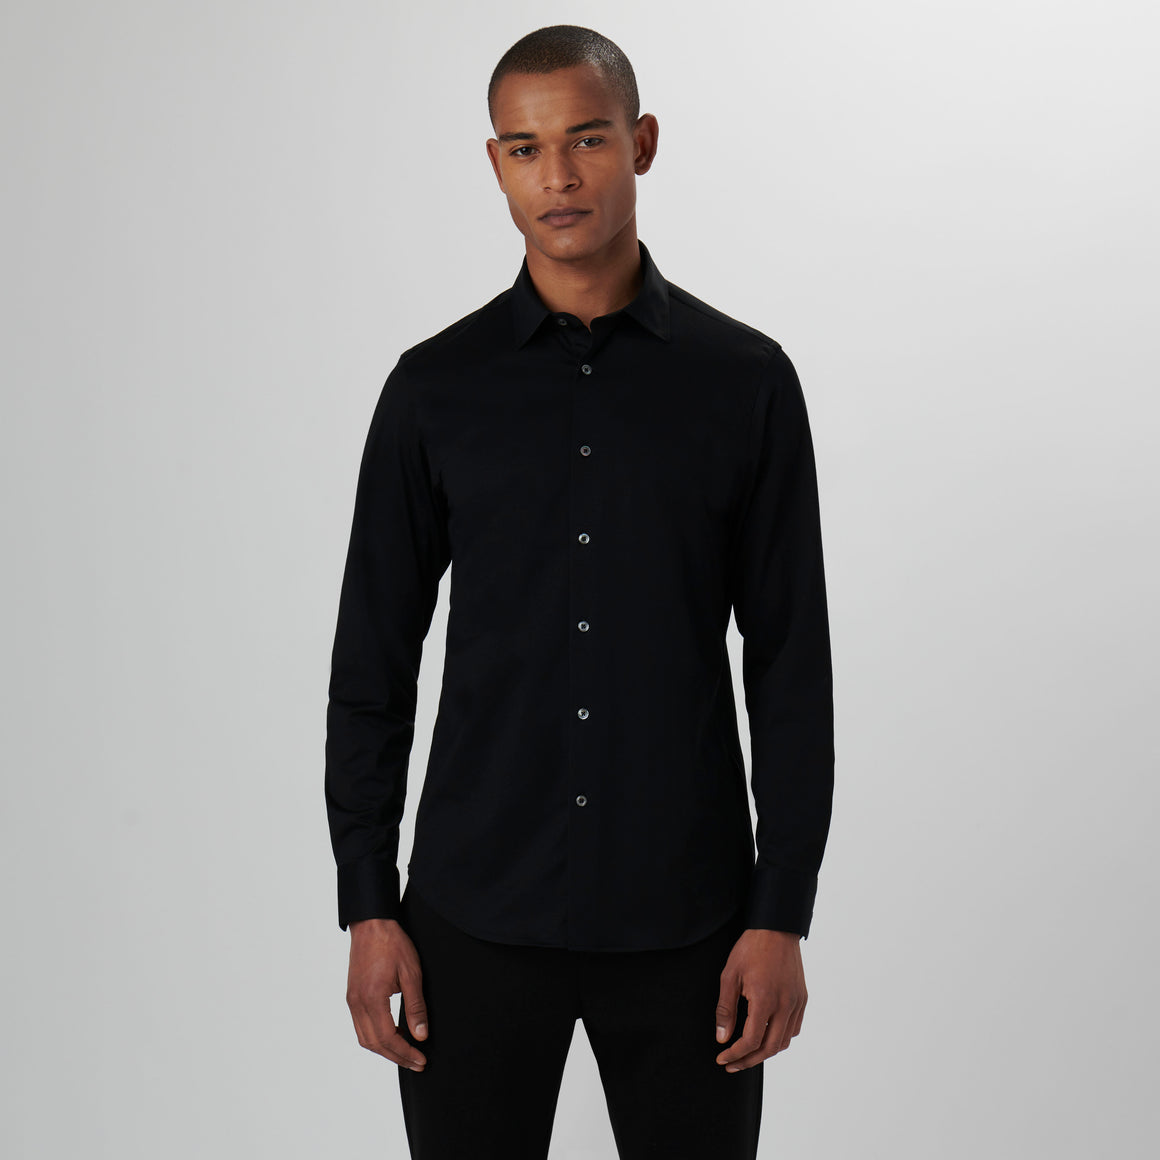 OOOHCotton James Long Sleeve Shirt - Solids Black